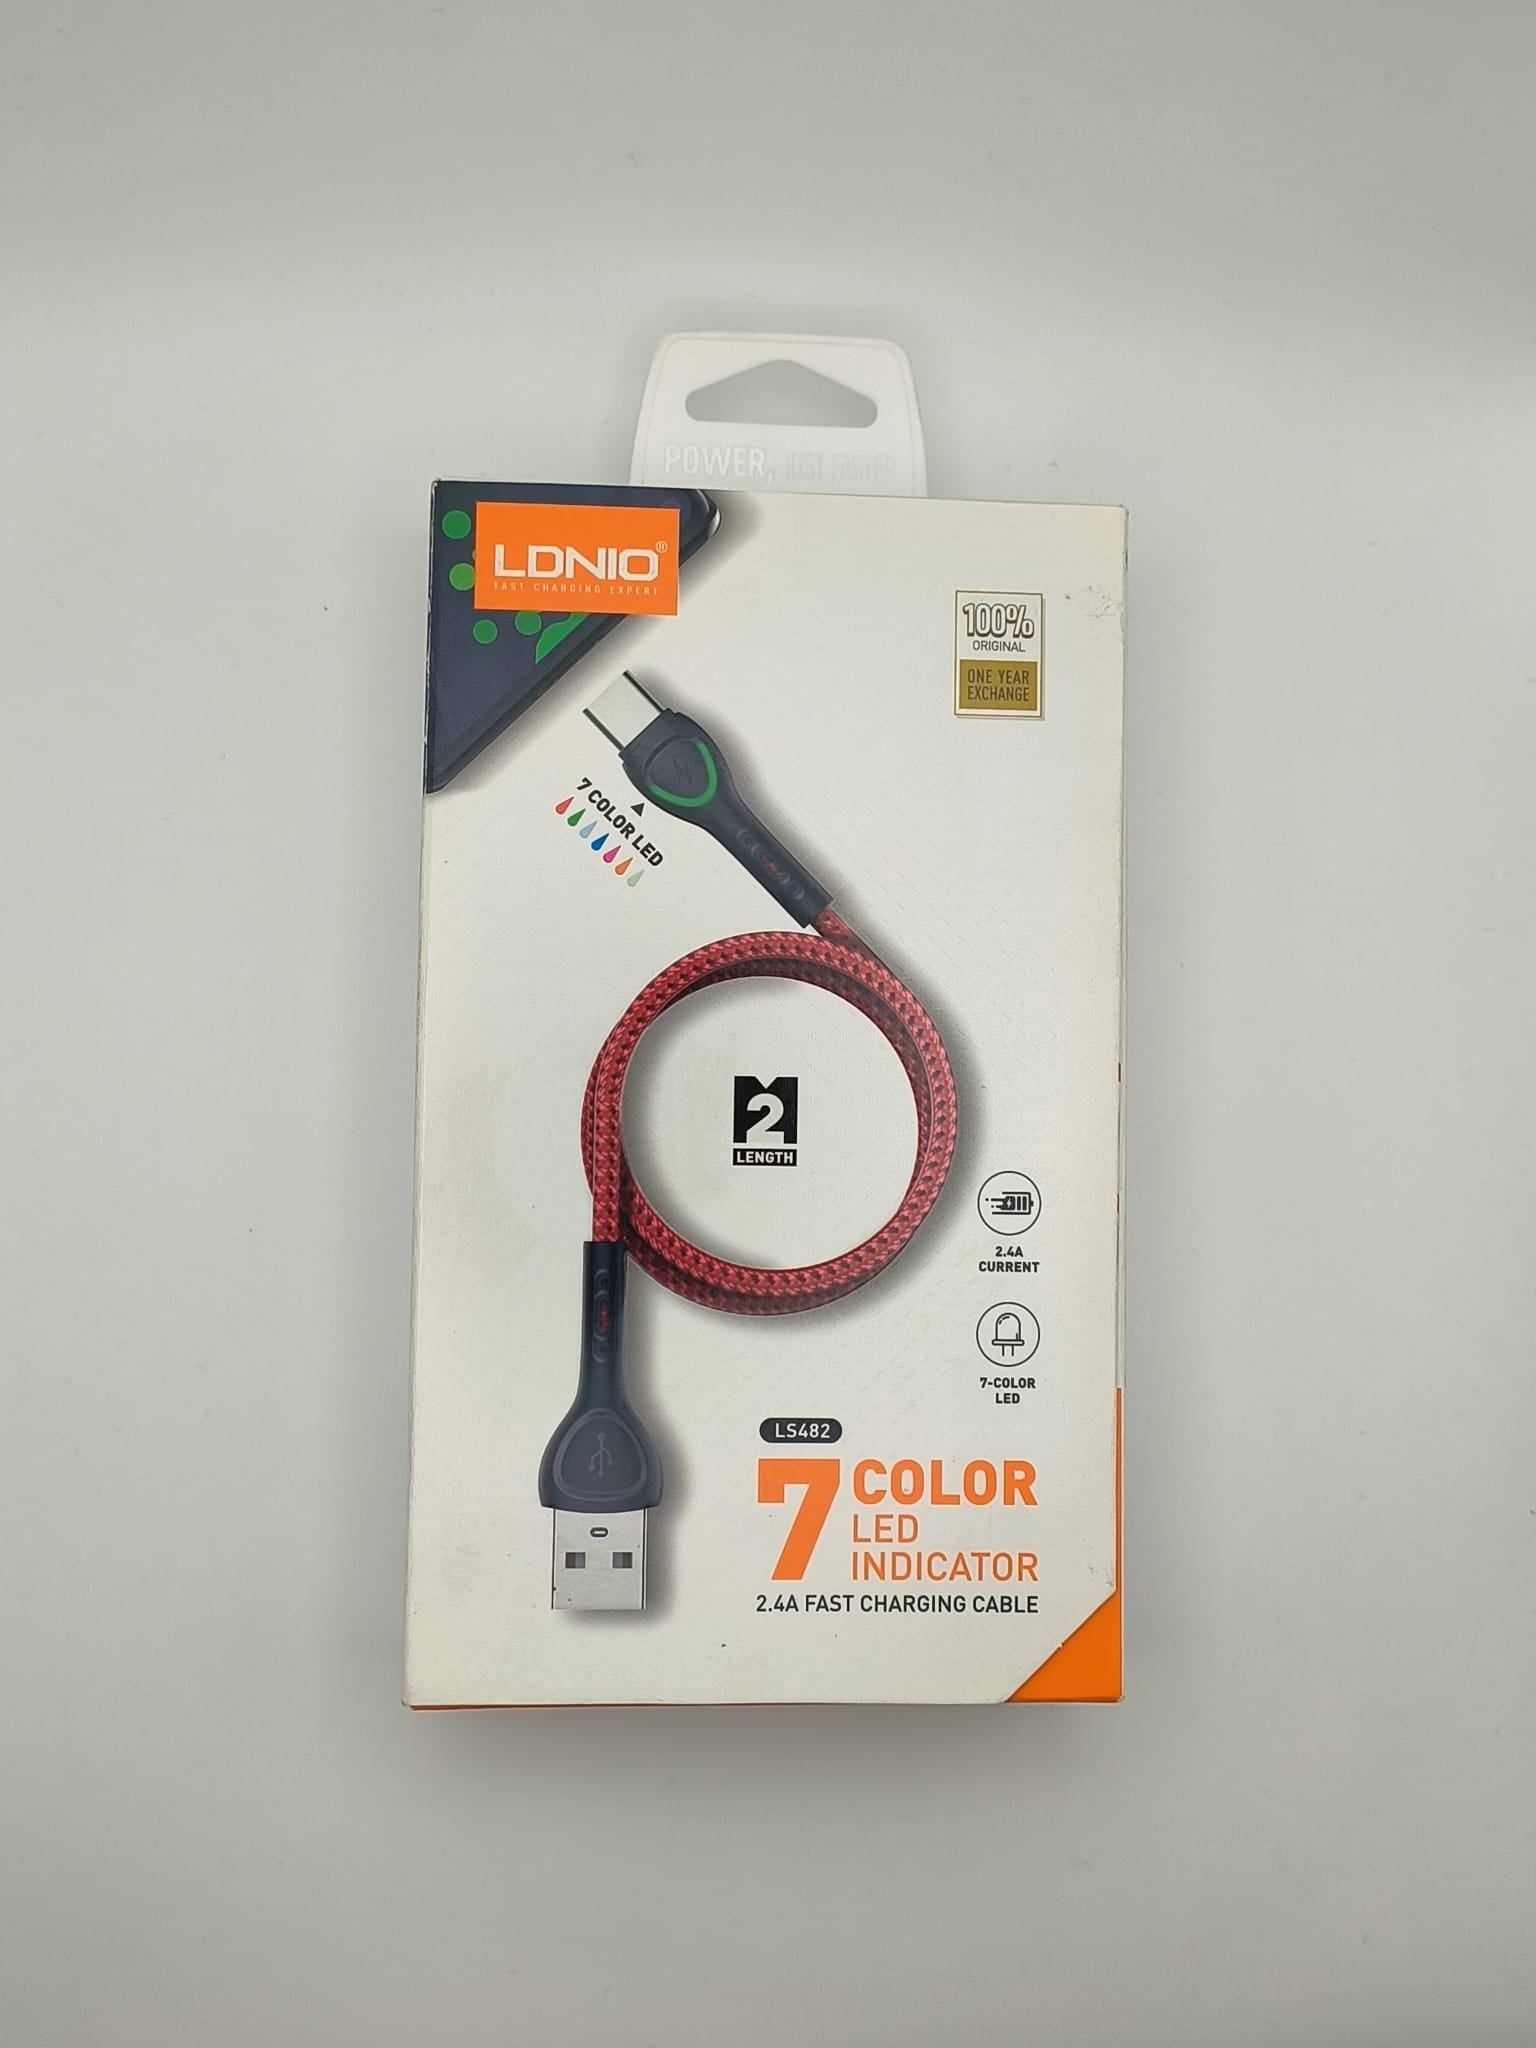 LDNIO LS482 2 m USB-USB-C-Kabel (rot) mit 7 LED Farben